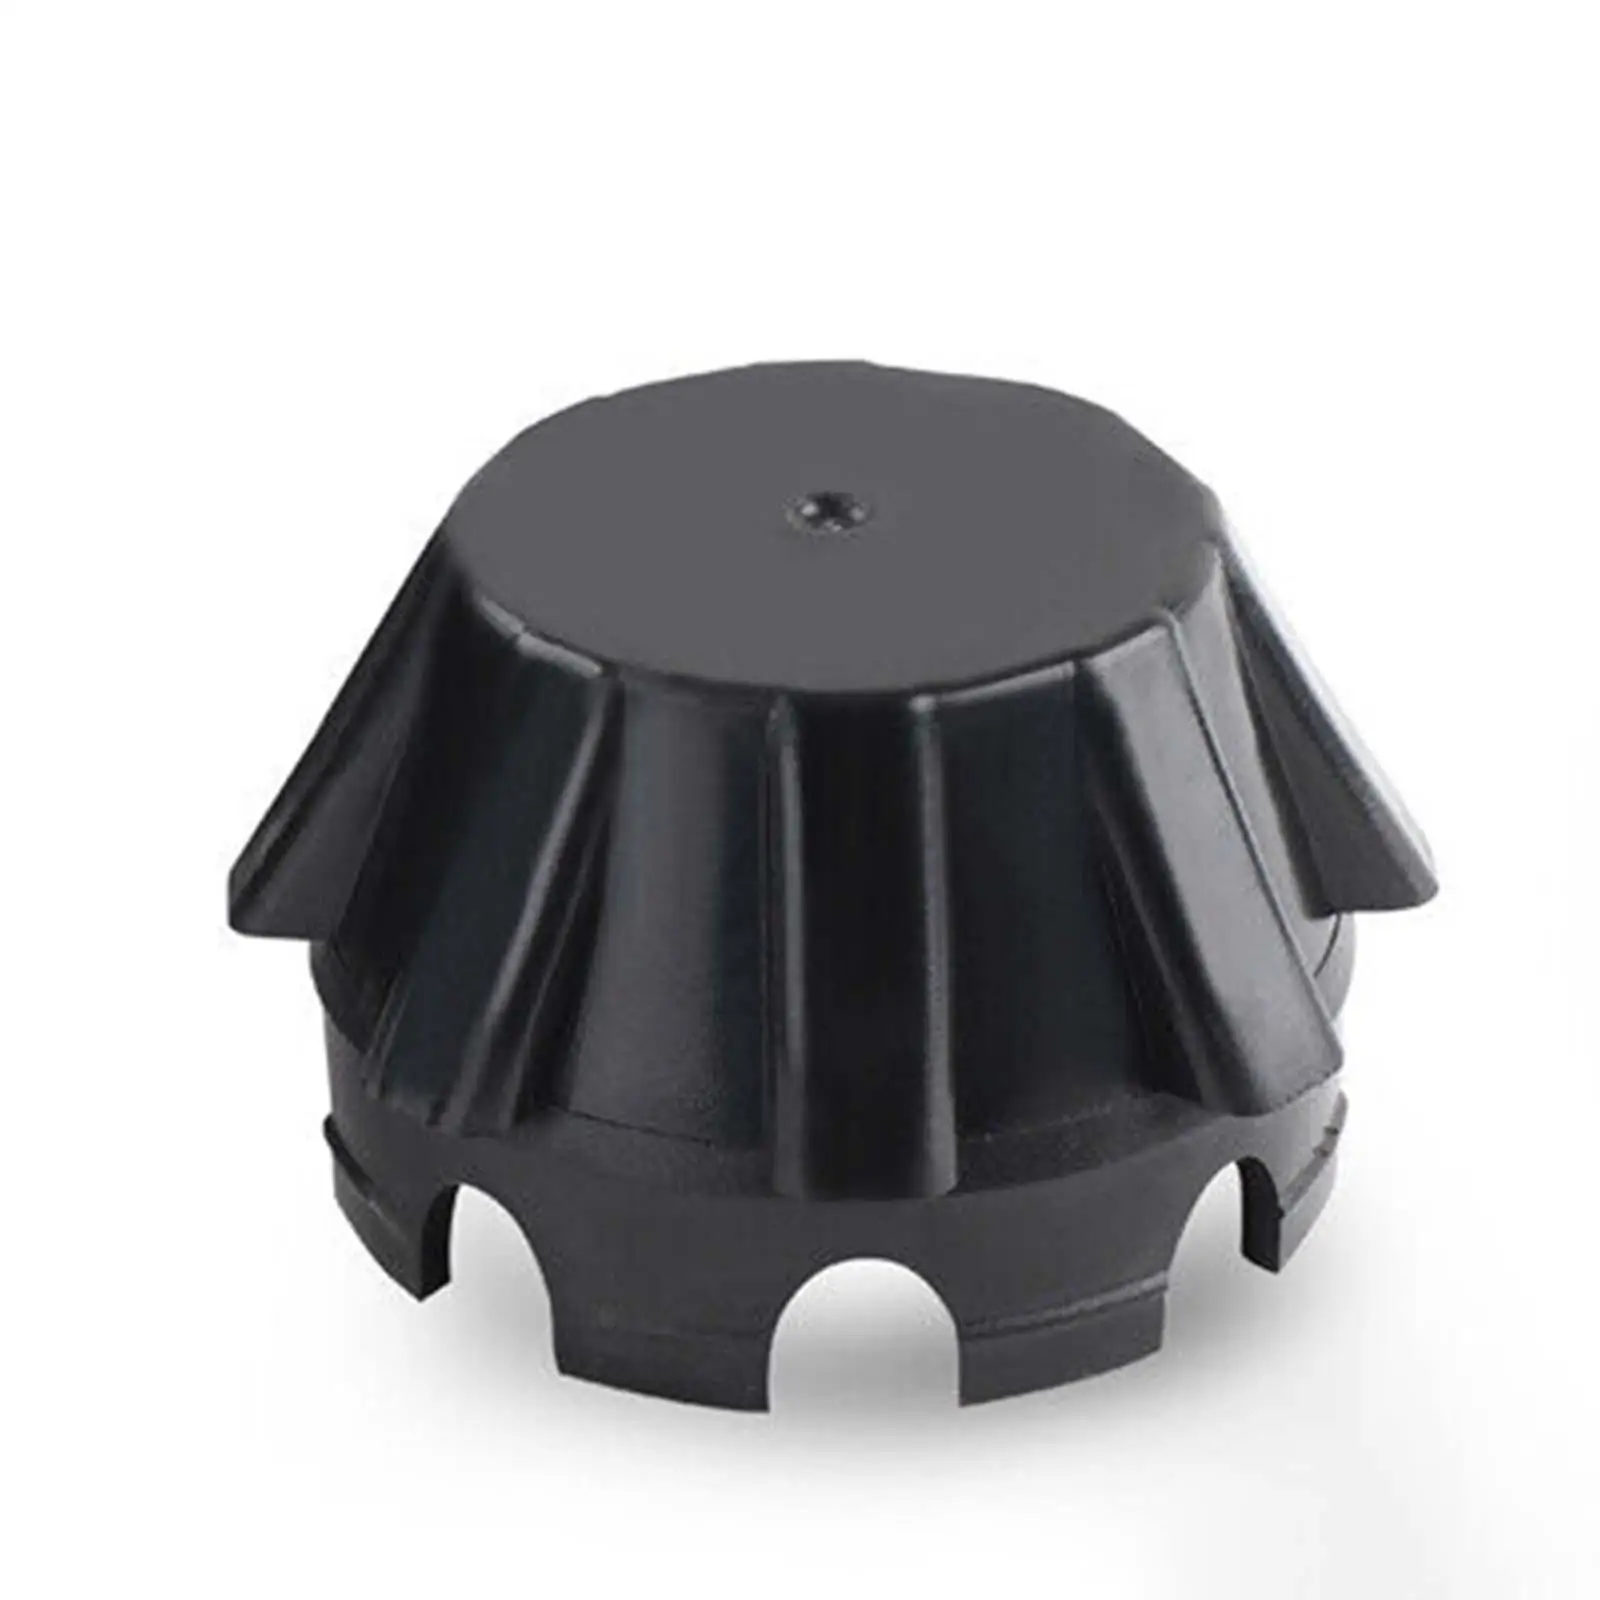 4 Pieces Dust Center Hub Cap Covers for Kawasaki Krx 1000 Repair Part Professional High Reliability Durable Premium